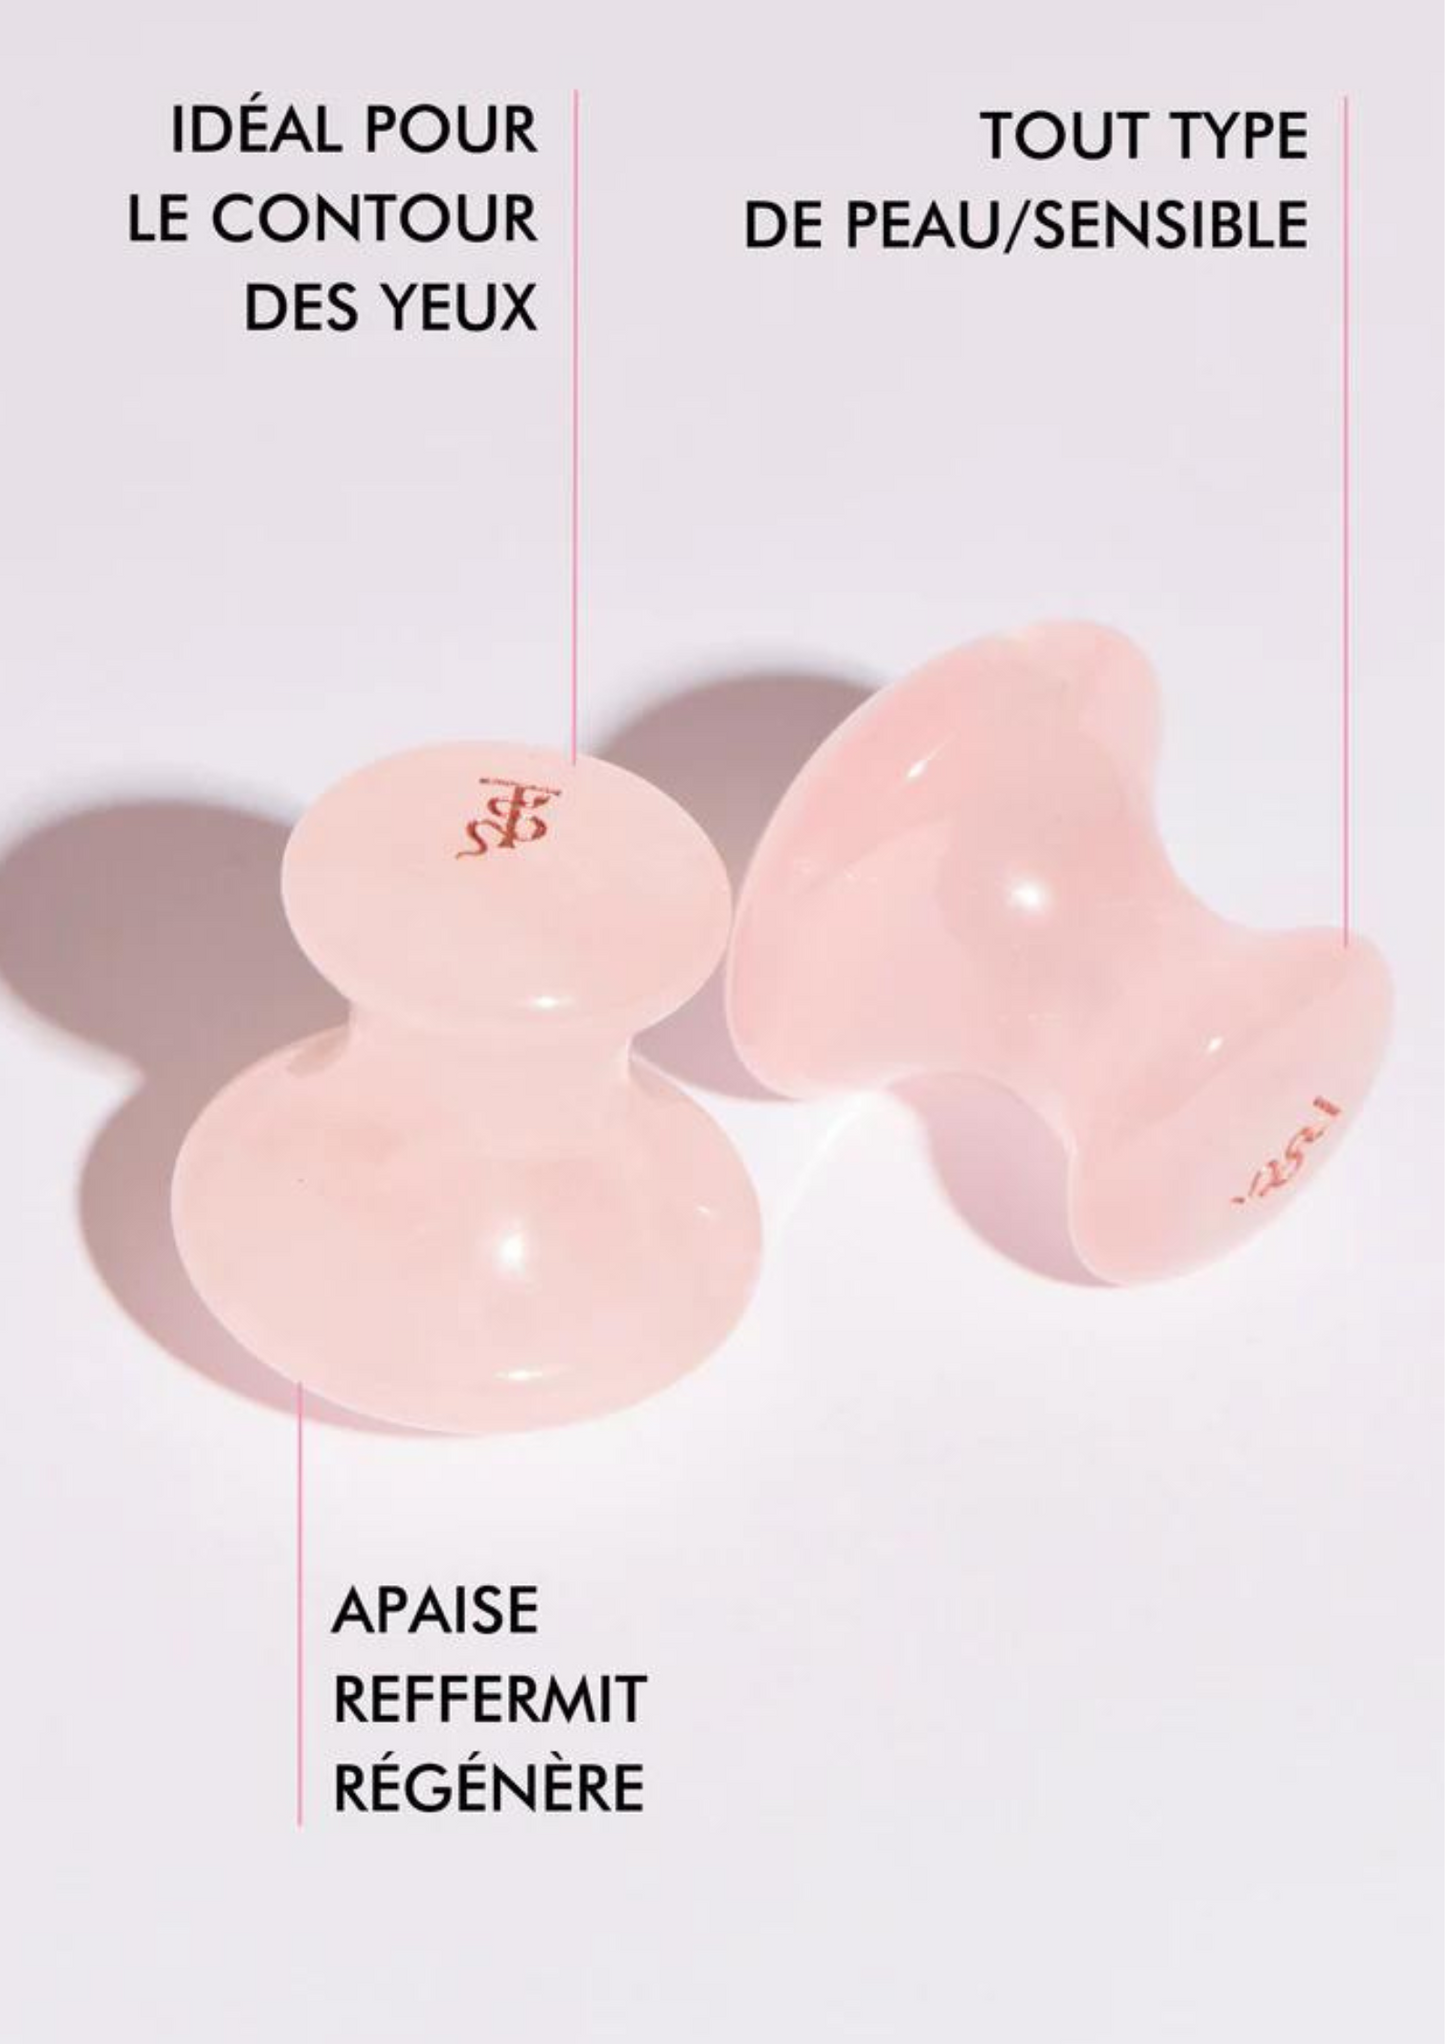 Pierre de massage visage - Mushroom en quartz rose